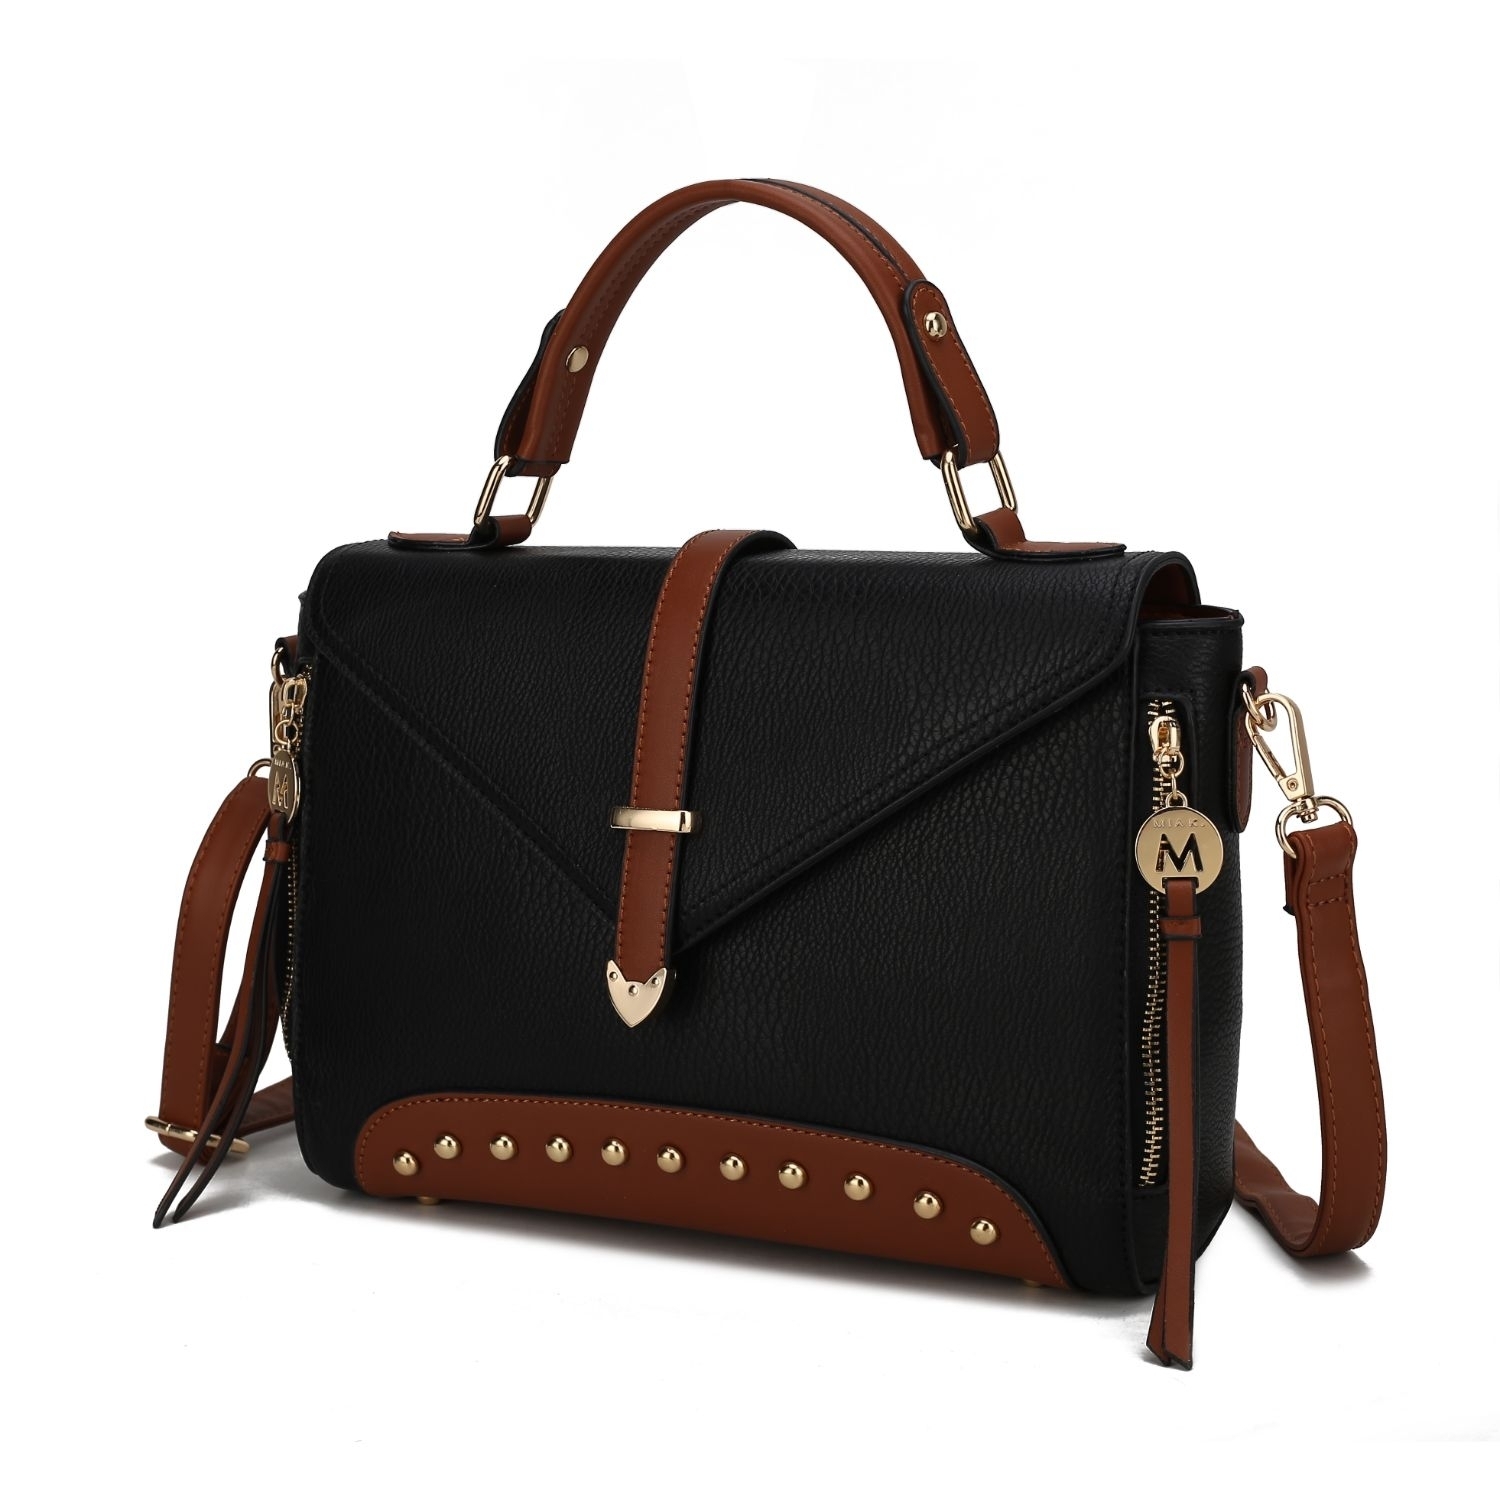 MKF Collection Angela Vegan Color-Block Leather Womens Satchel Handbag By Mia K - Blush